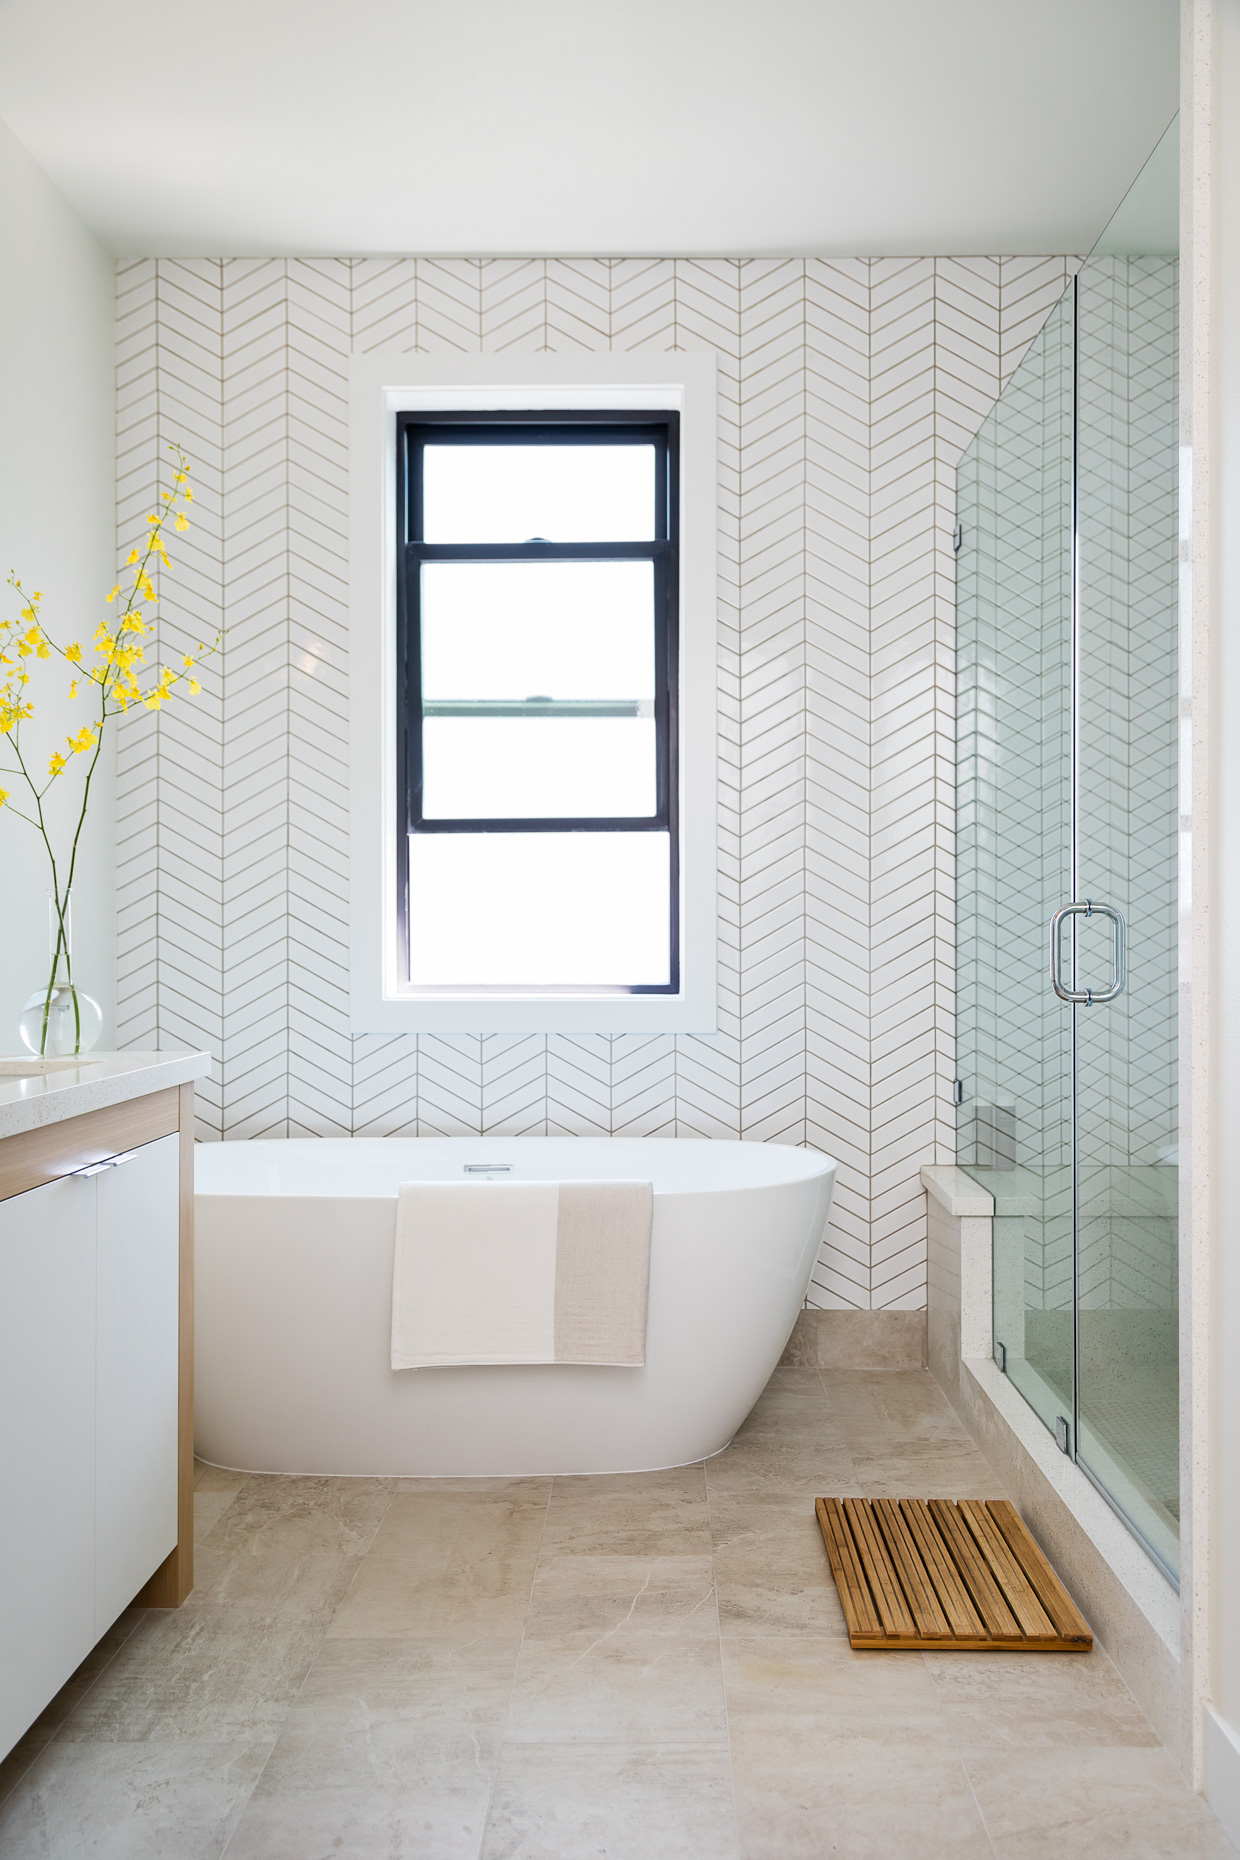 SiriBerting, SiriBertingPhotography,  Interiors, bathroom style, clean design, soaking tub, bath room decor